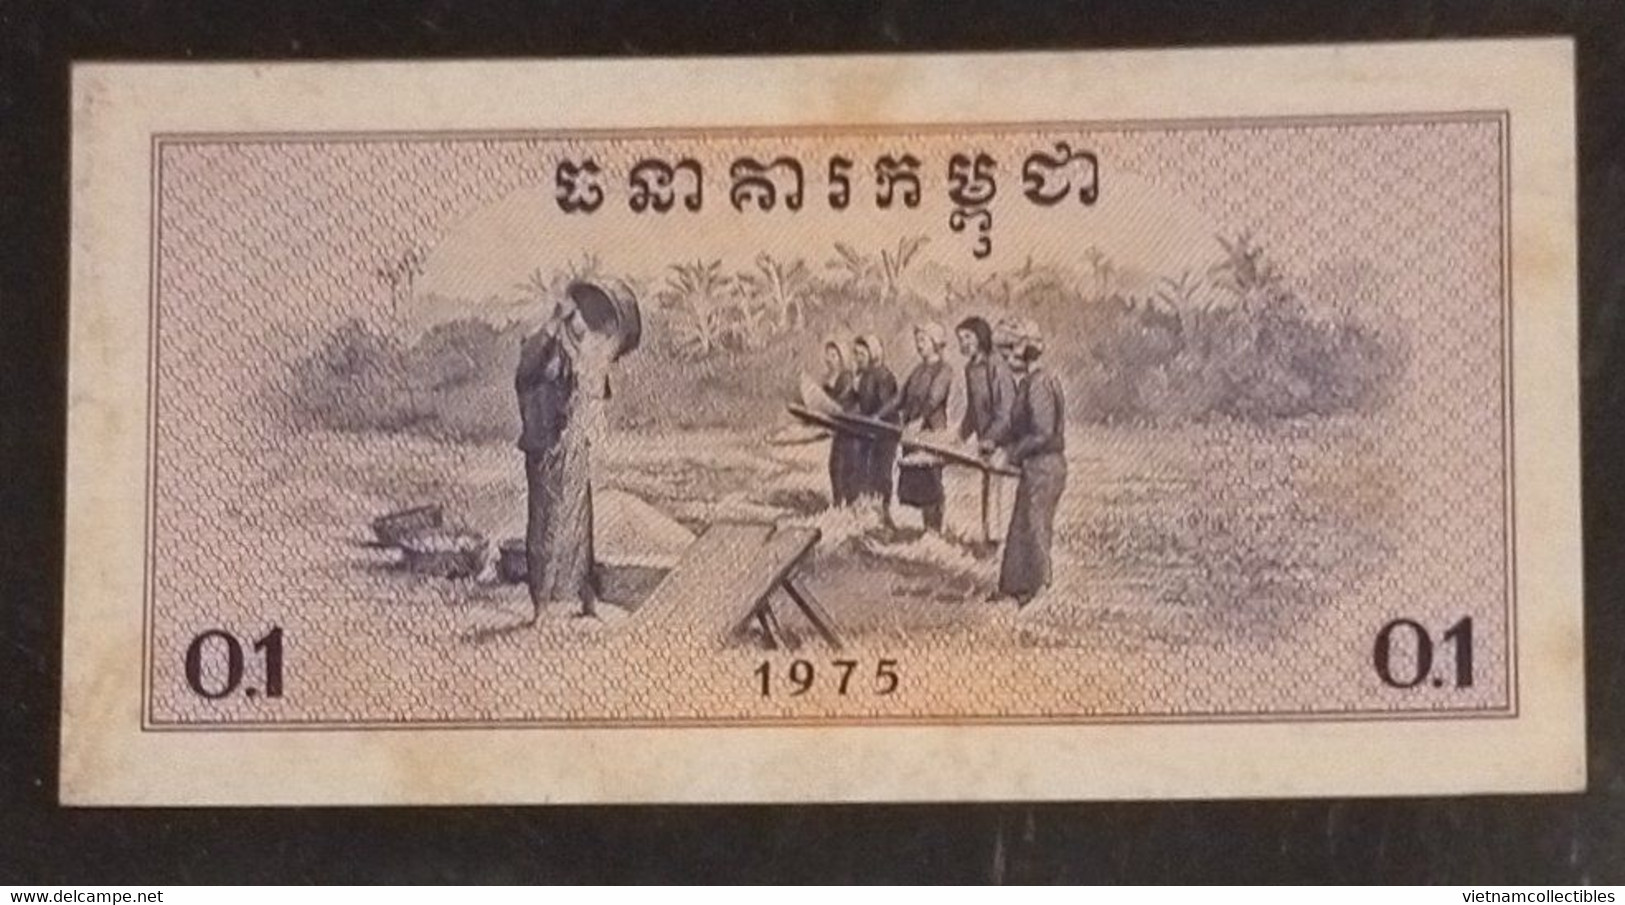 Cambodia Cambodge Pol Pot Khmer Rouge Regime 0.1 Riel UNC Banknote Note 1975 - Pick # 18 / 02 Photos - Cambodia